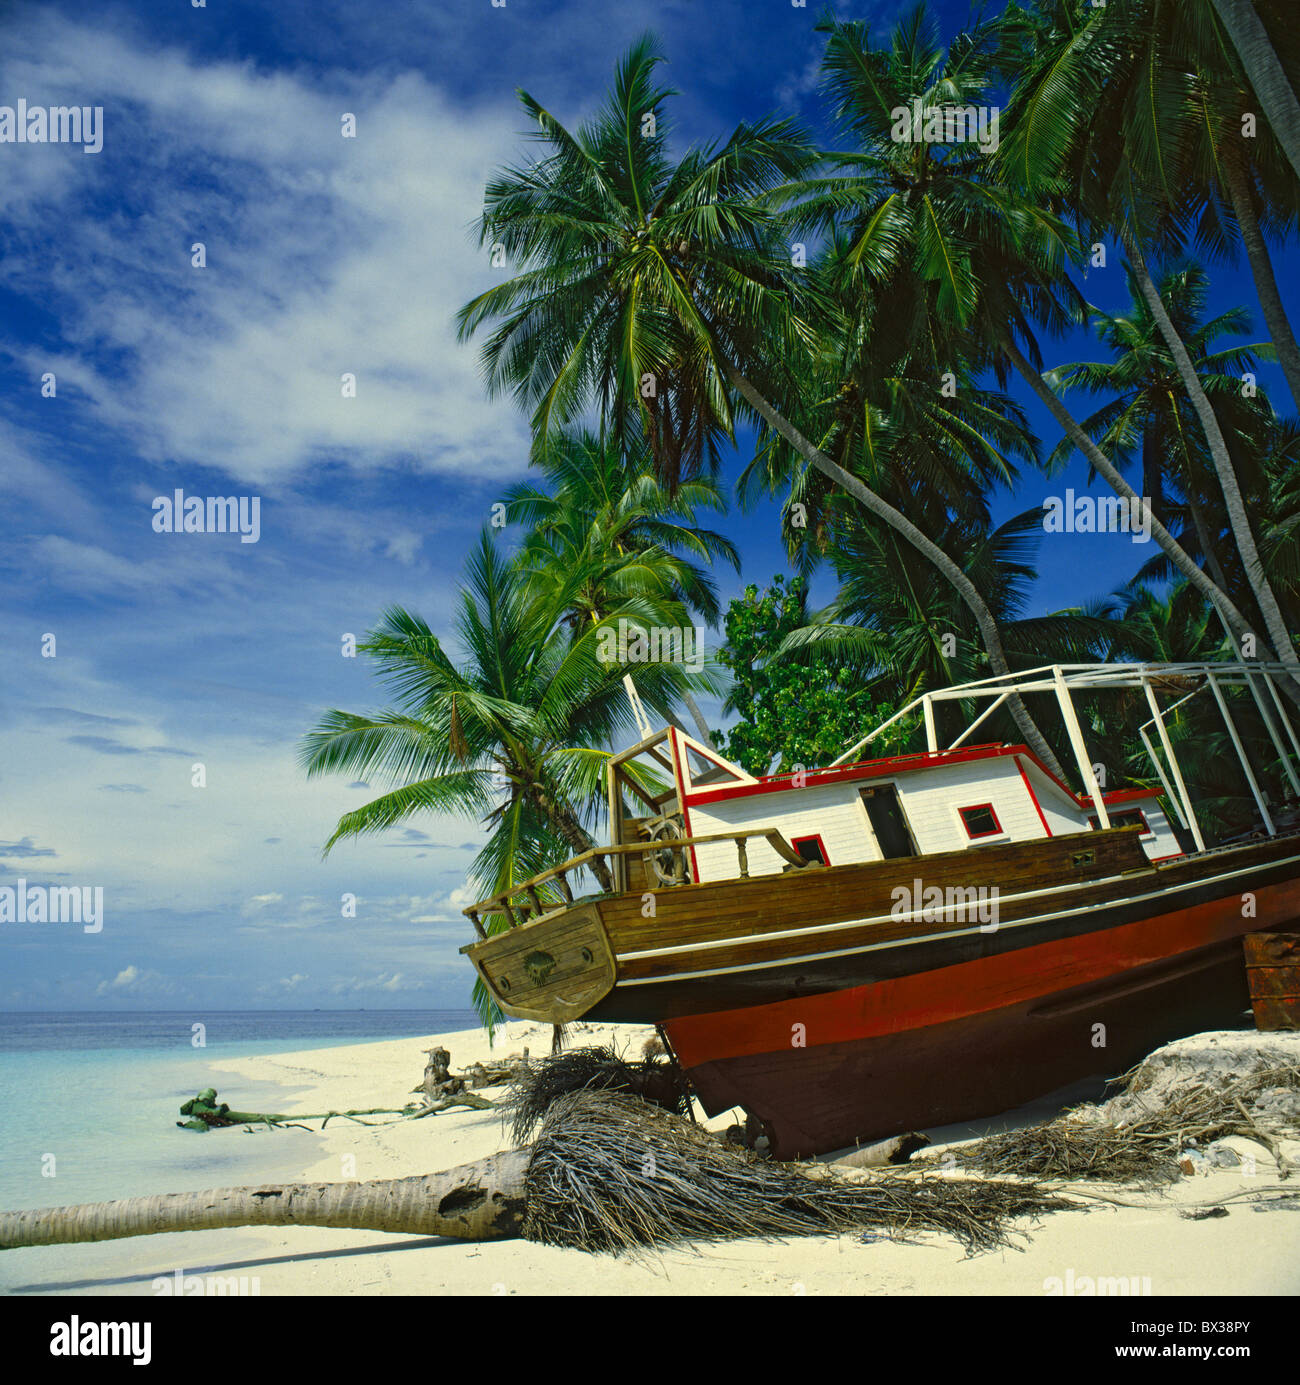 Kuda Bandos Strand Meer Palmen Baum Strand Schiff Palmen Meer Malediven Asien Stockfoto